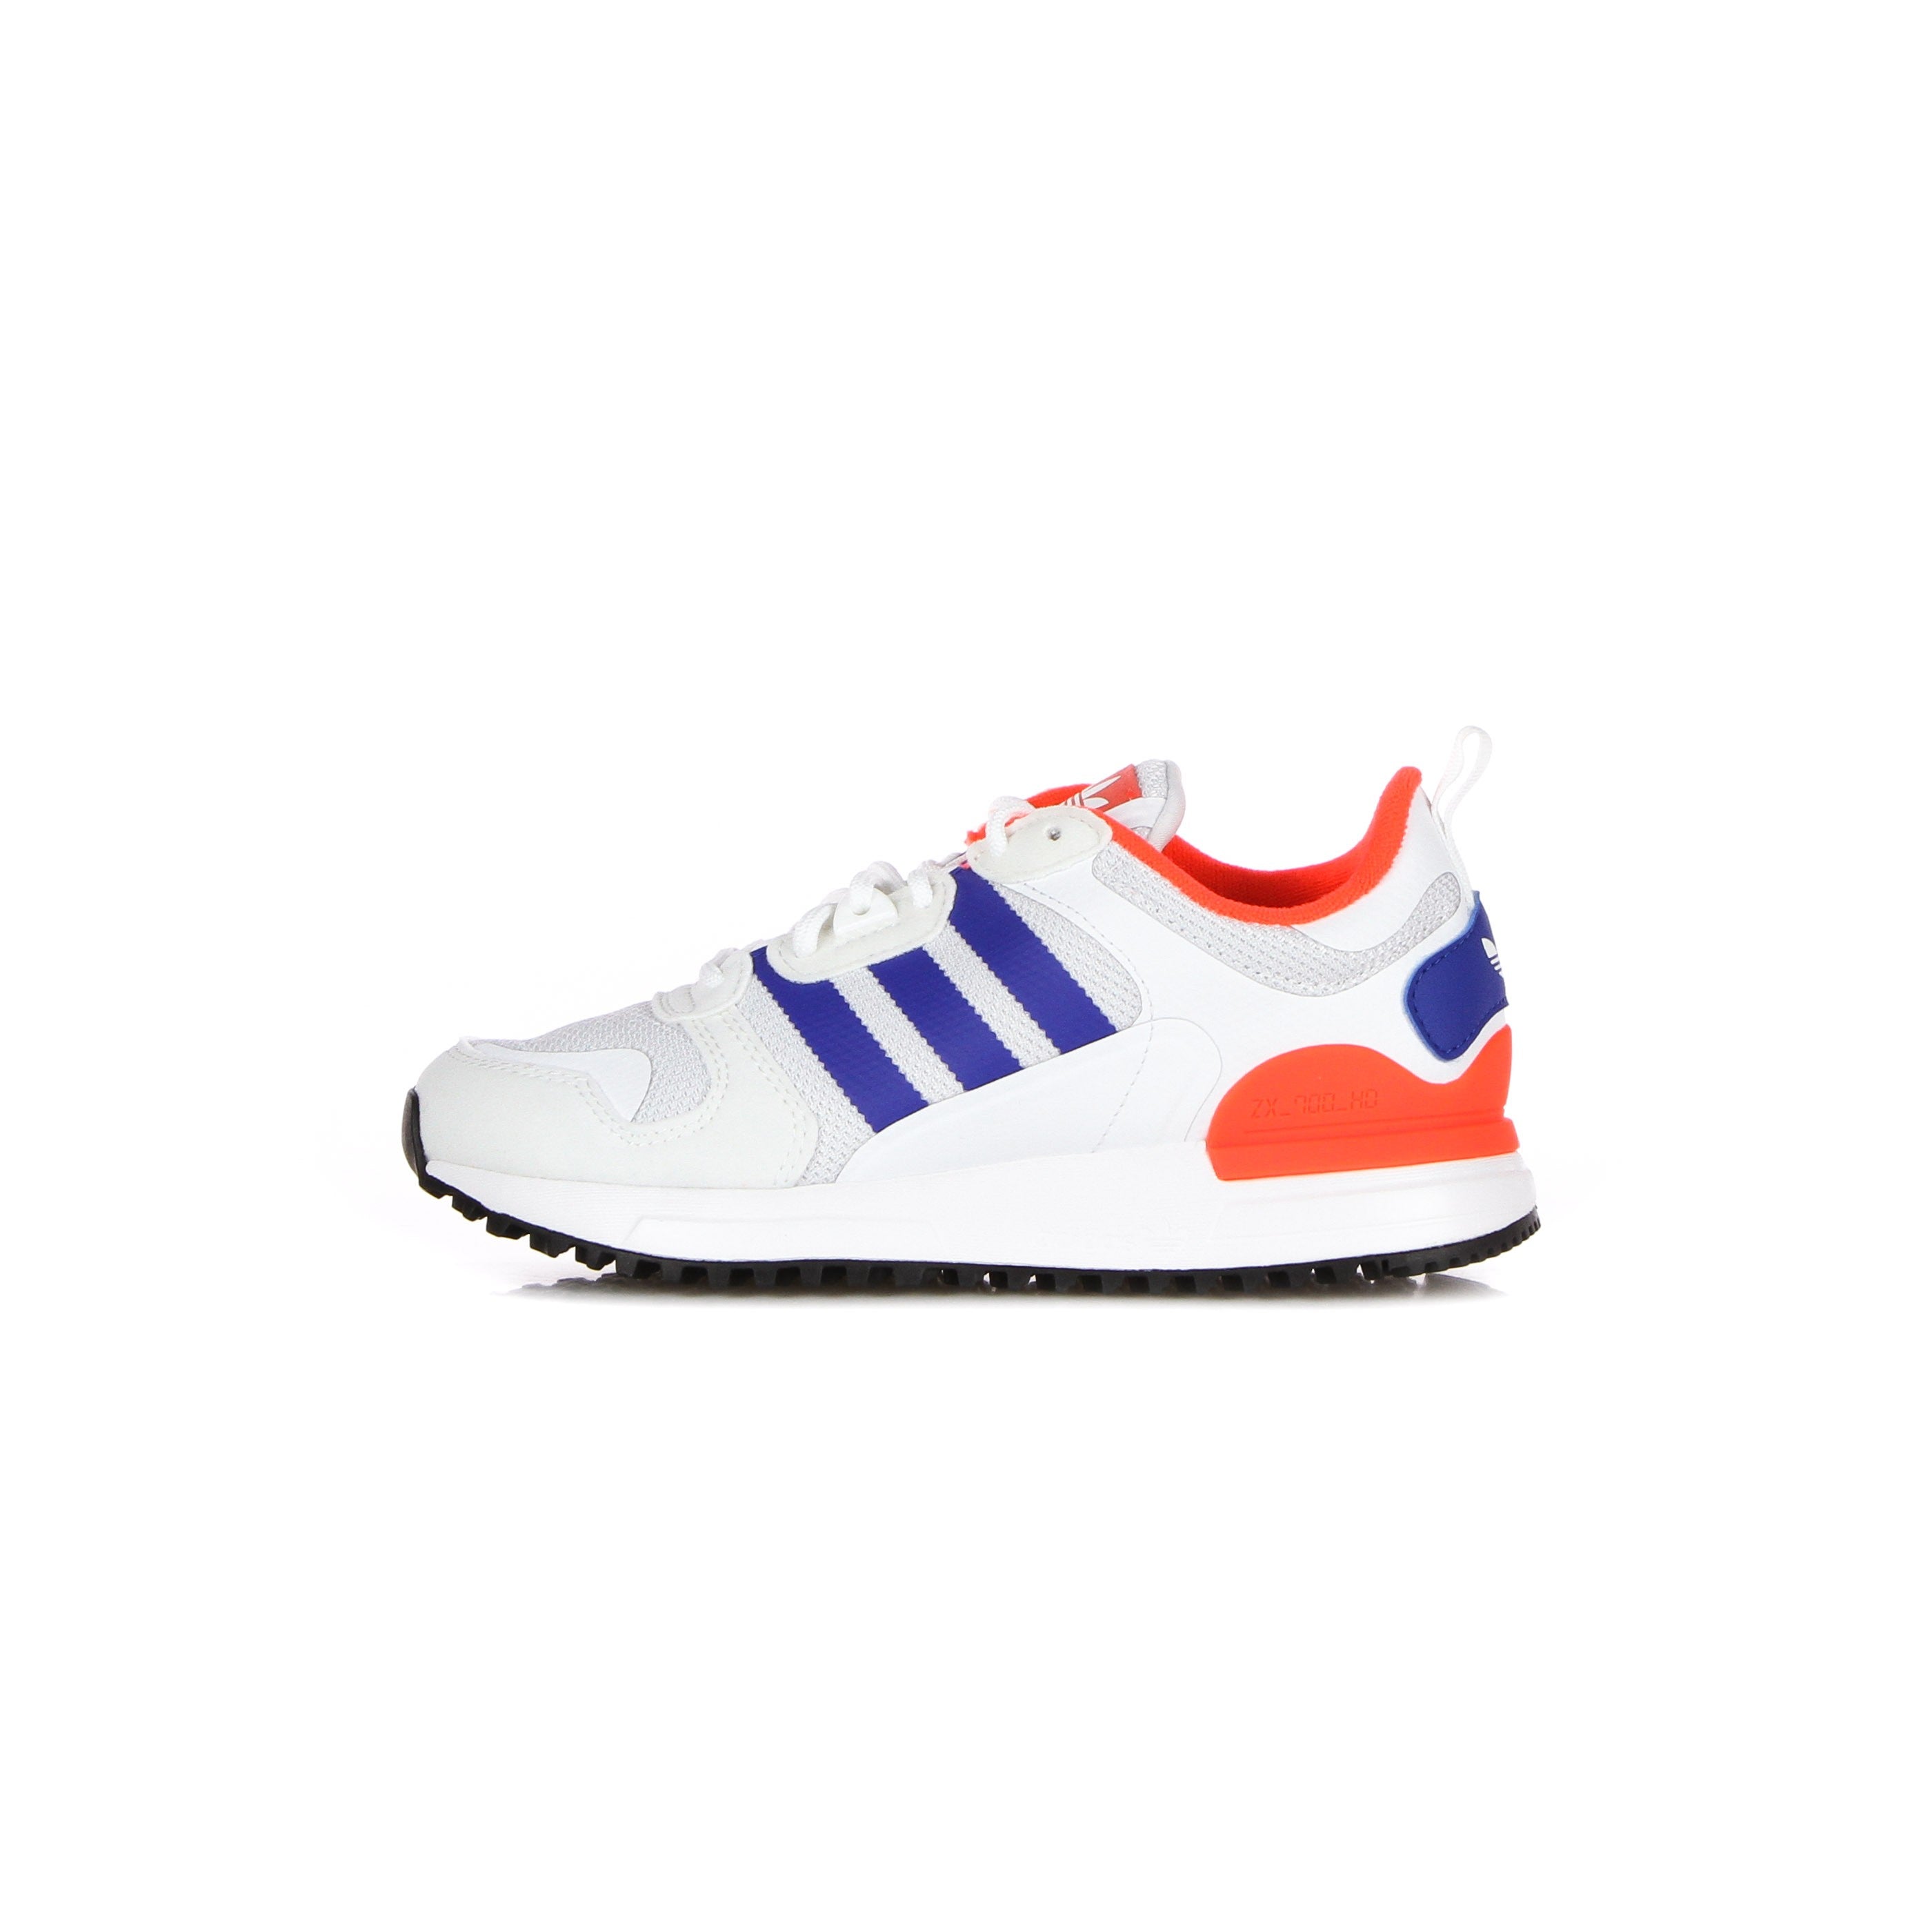 Adidas, Scarpa Bassa Ragazzo Zx 700 Hd J, Cloud White/bold Blue/solar Red